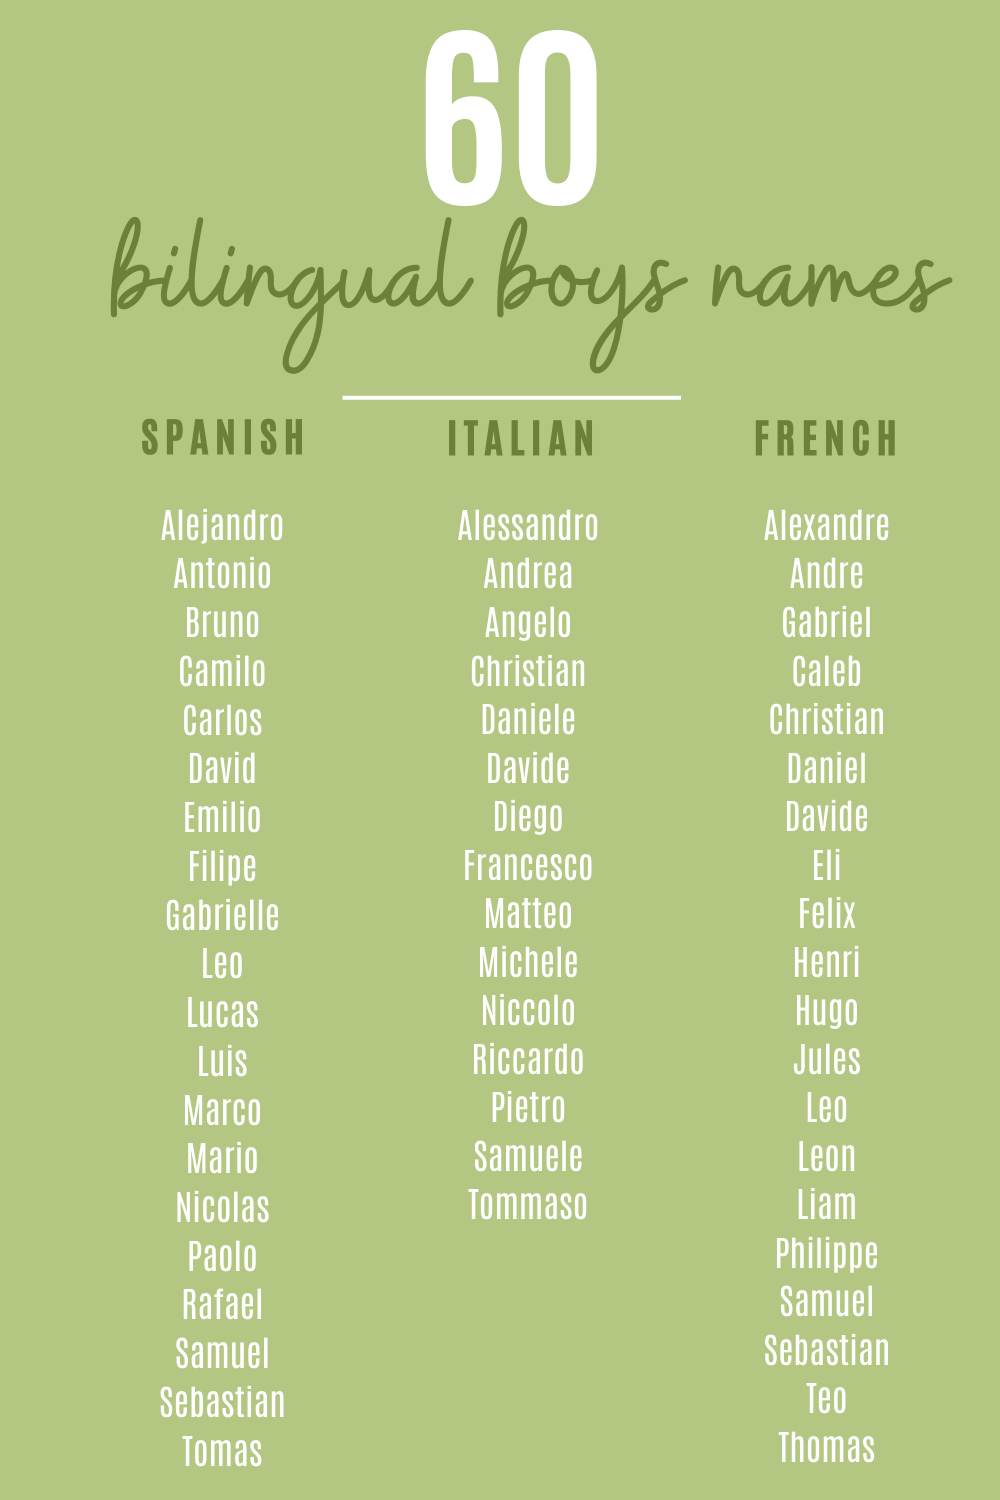 hispanic names